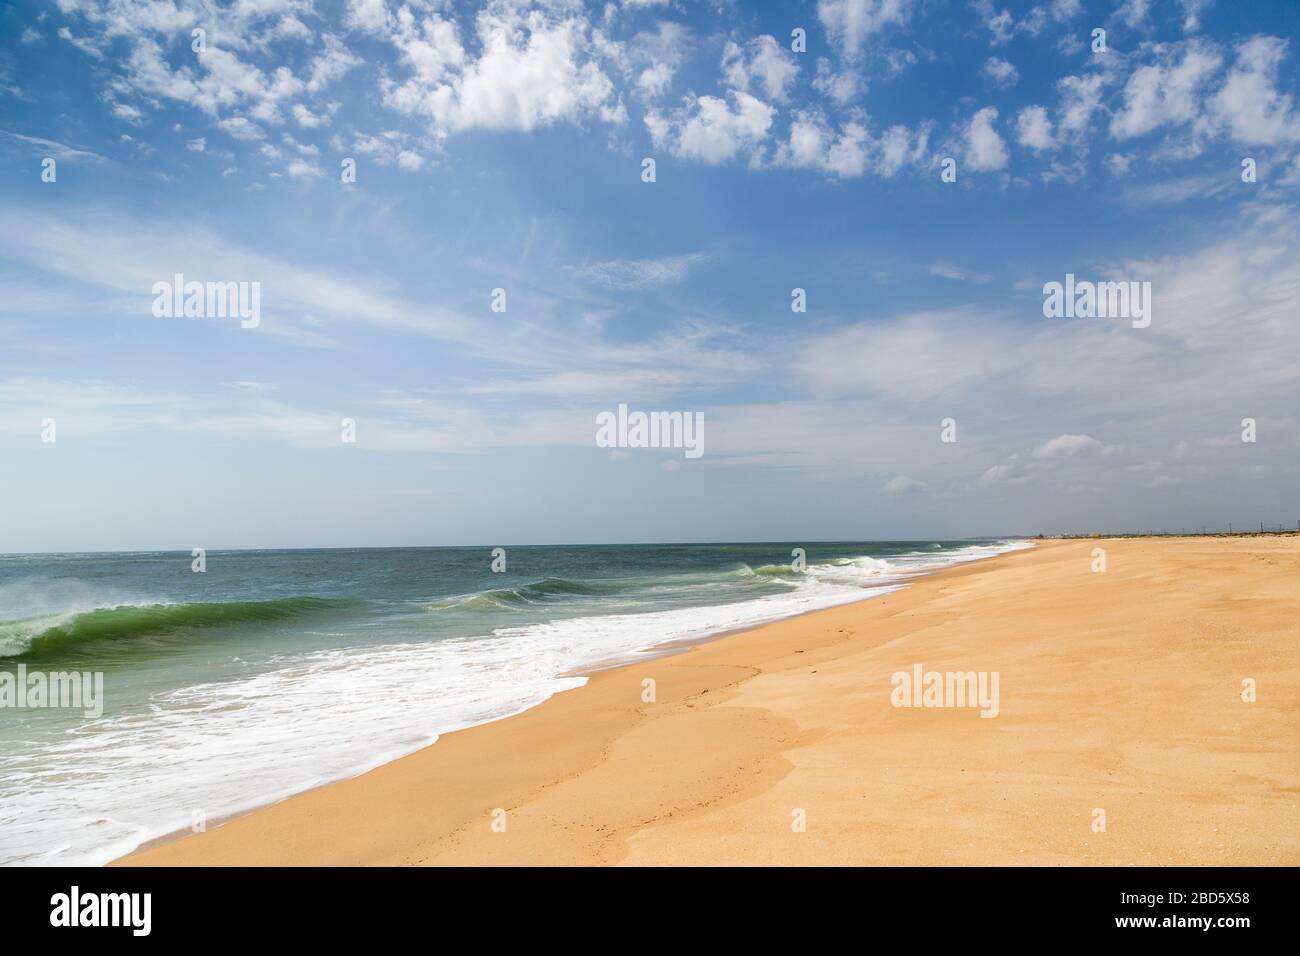 Empty beach, Praia de Faro (Mar), Algarve, Portugal Stock Photo